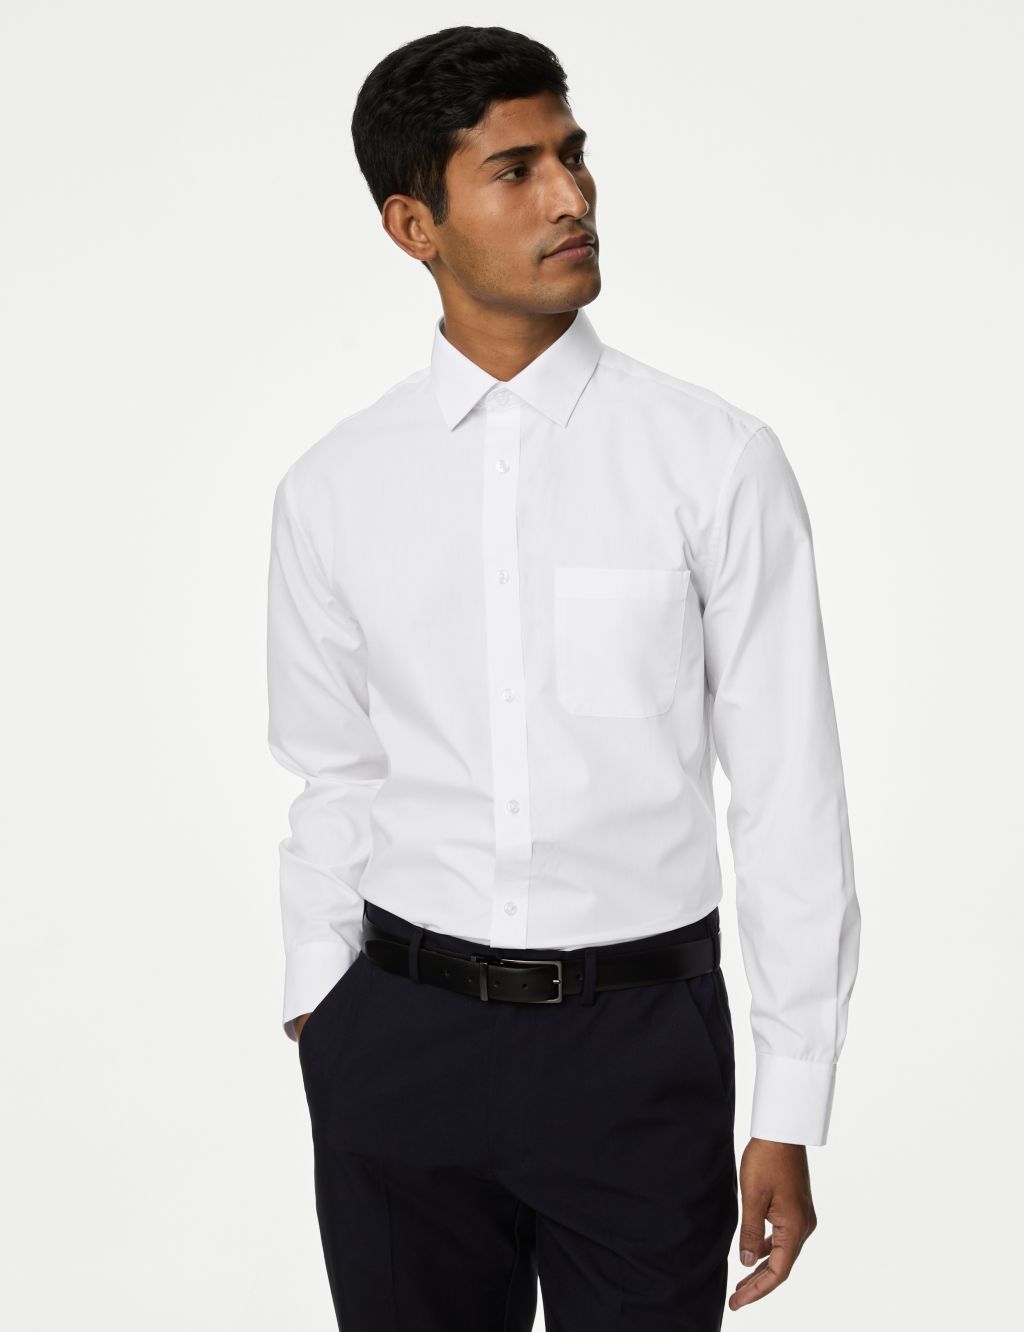 Men'S White Formal Shirts | M&S